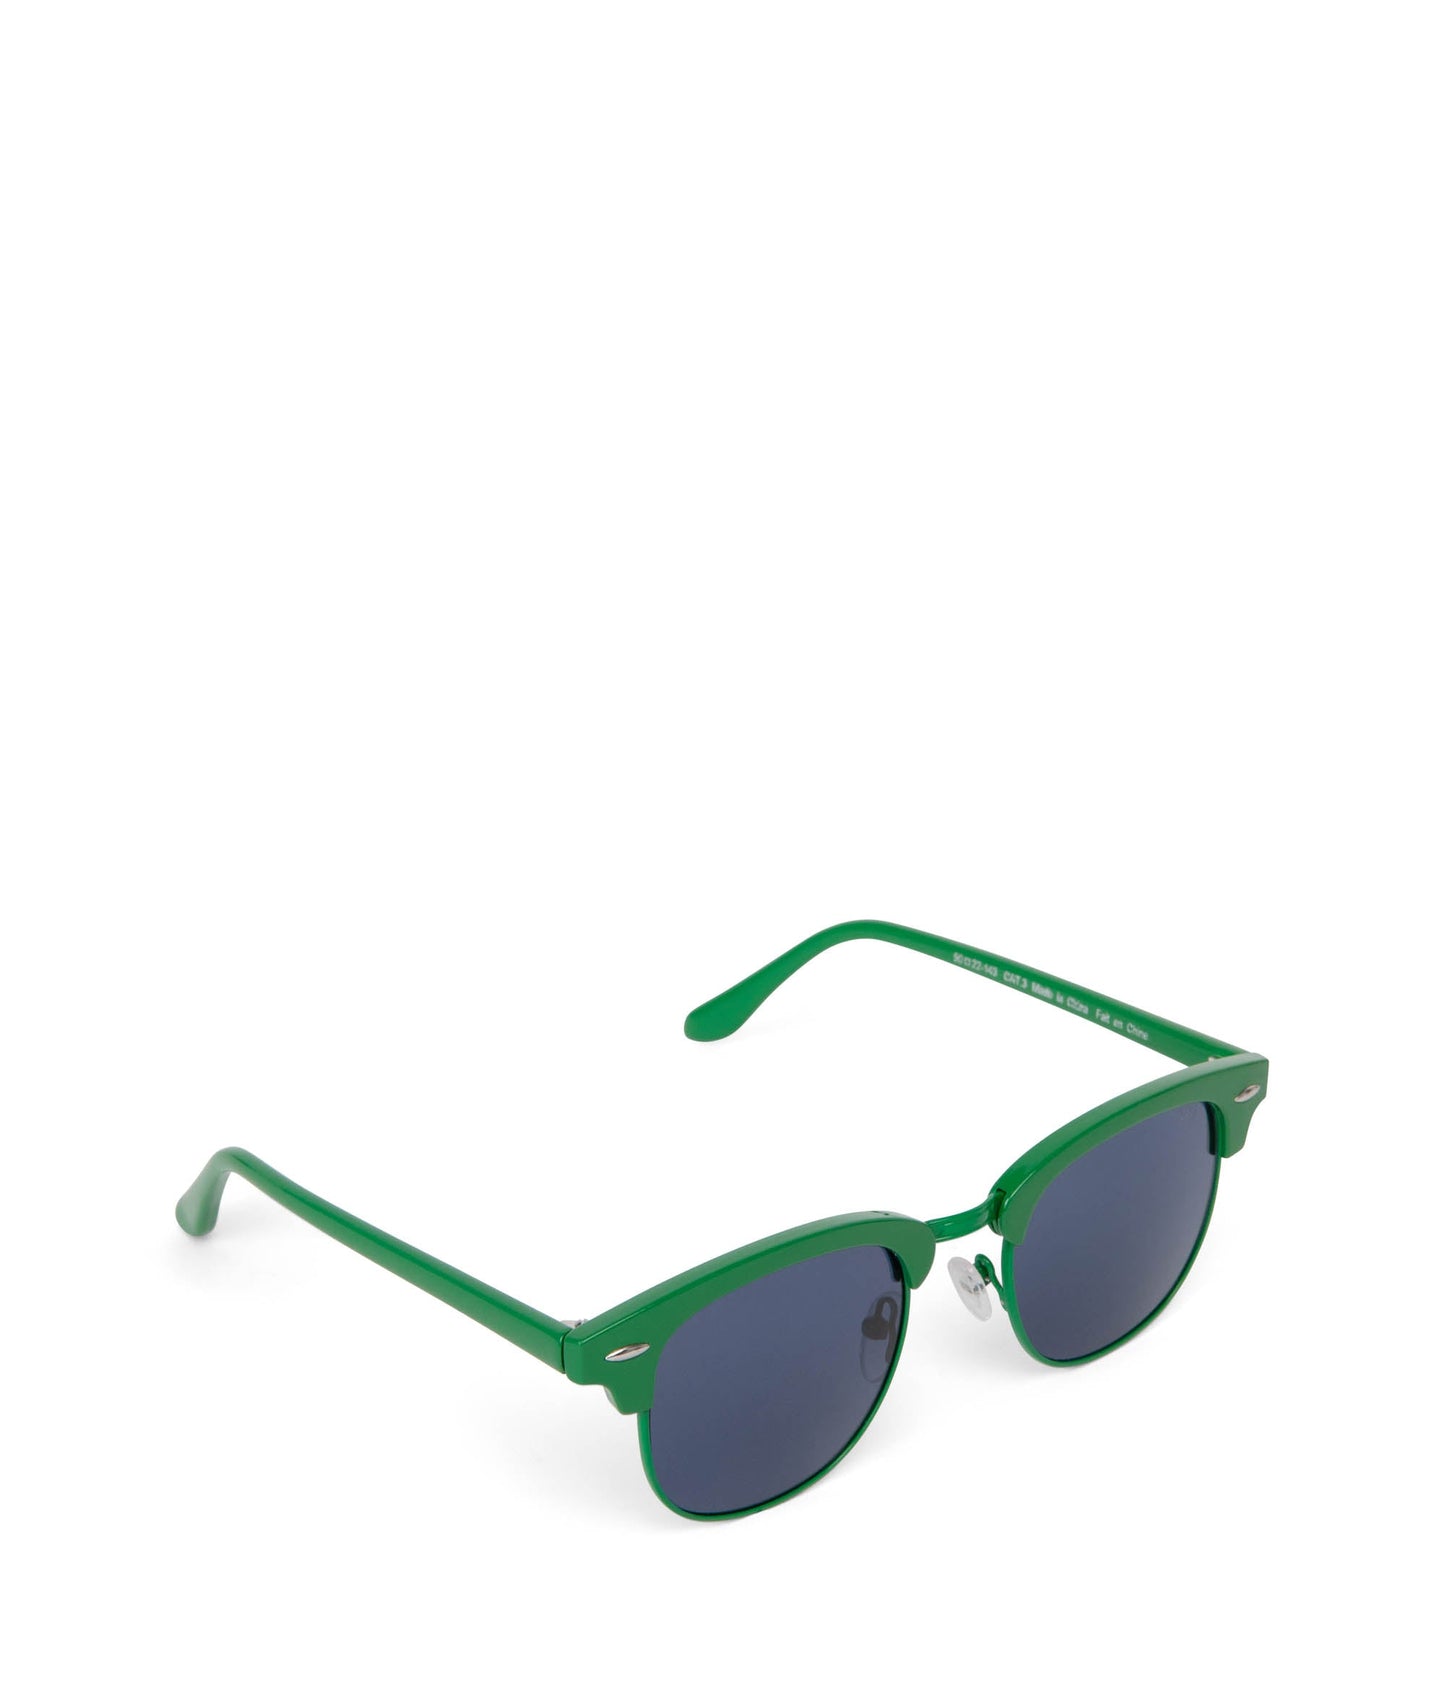 BUA Clubmaster Sunglasses | Color: Green, Blue - variant::grnblu